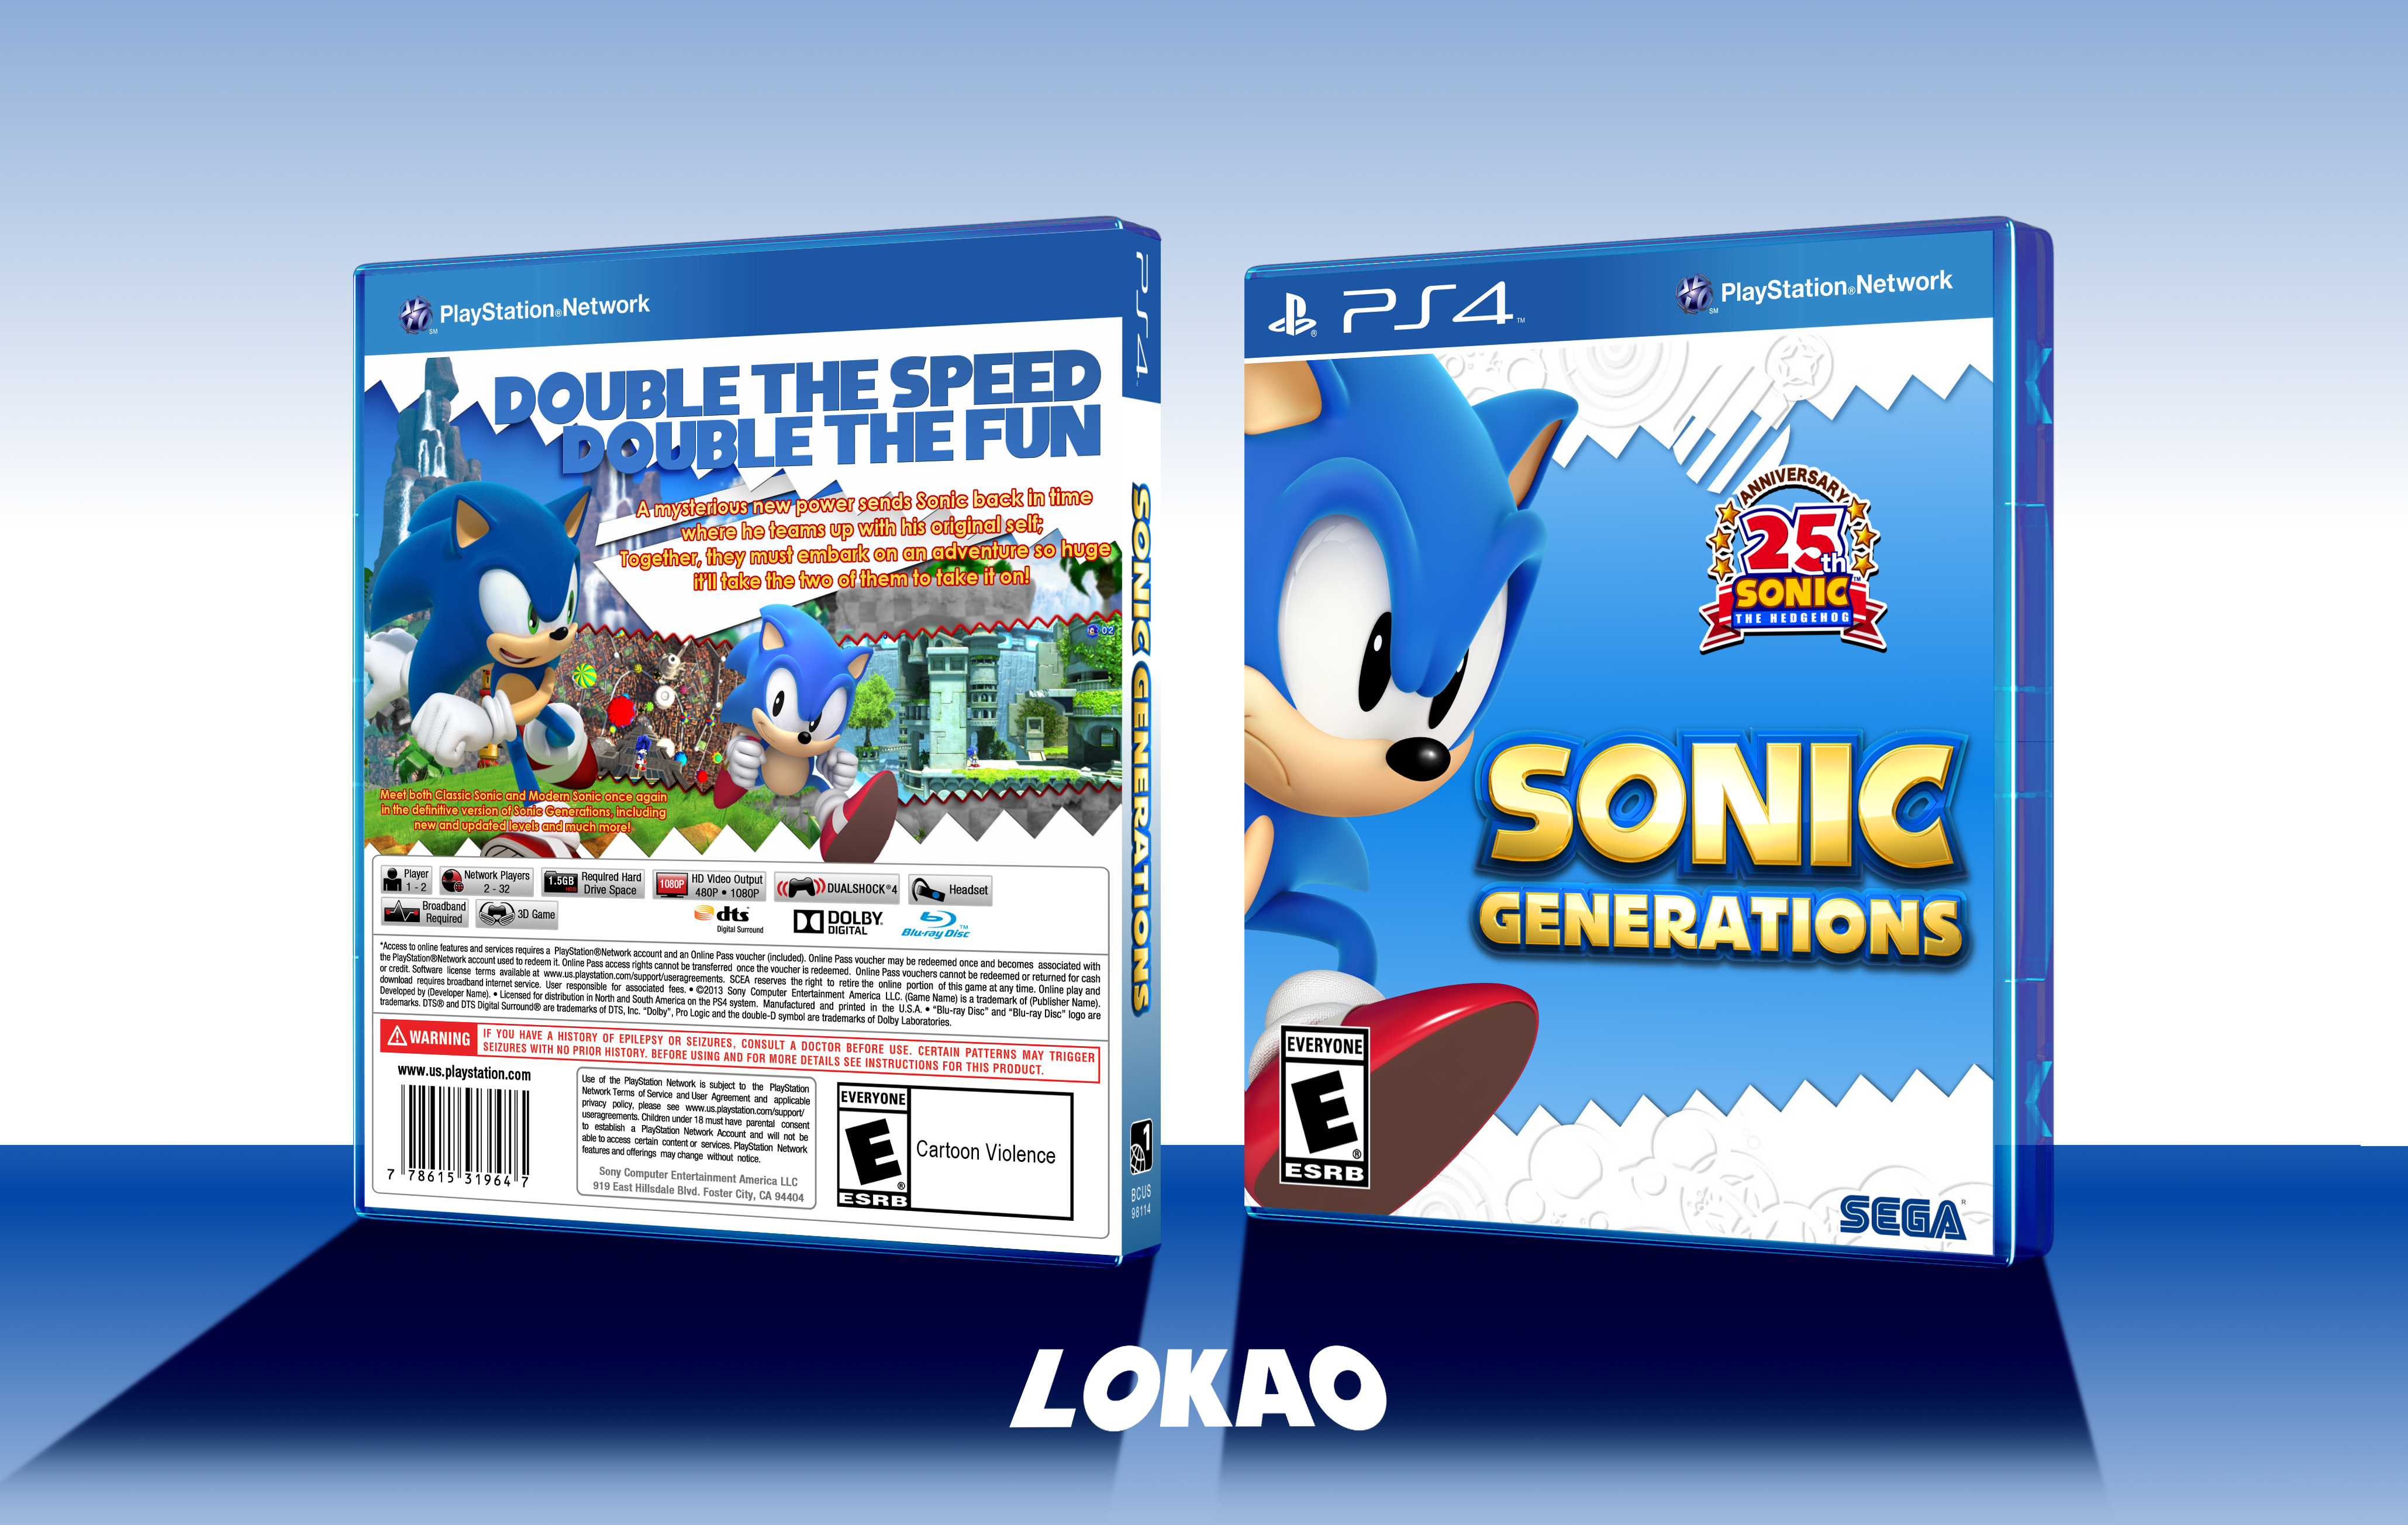 Sonic Generations Cover (PS4) by XenokoHarinezumi on DeviantArt